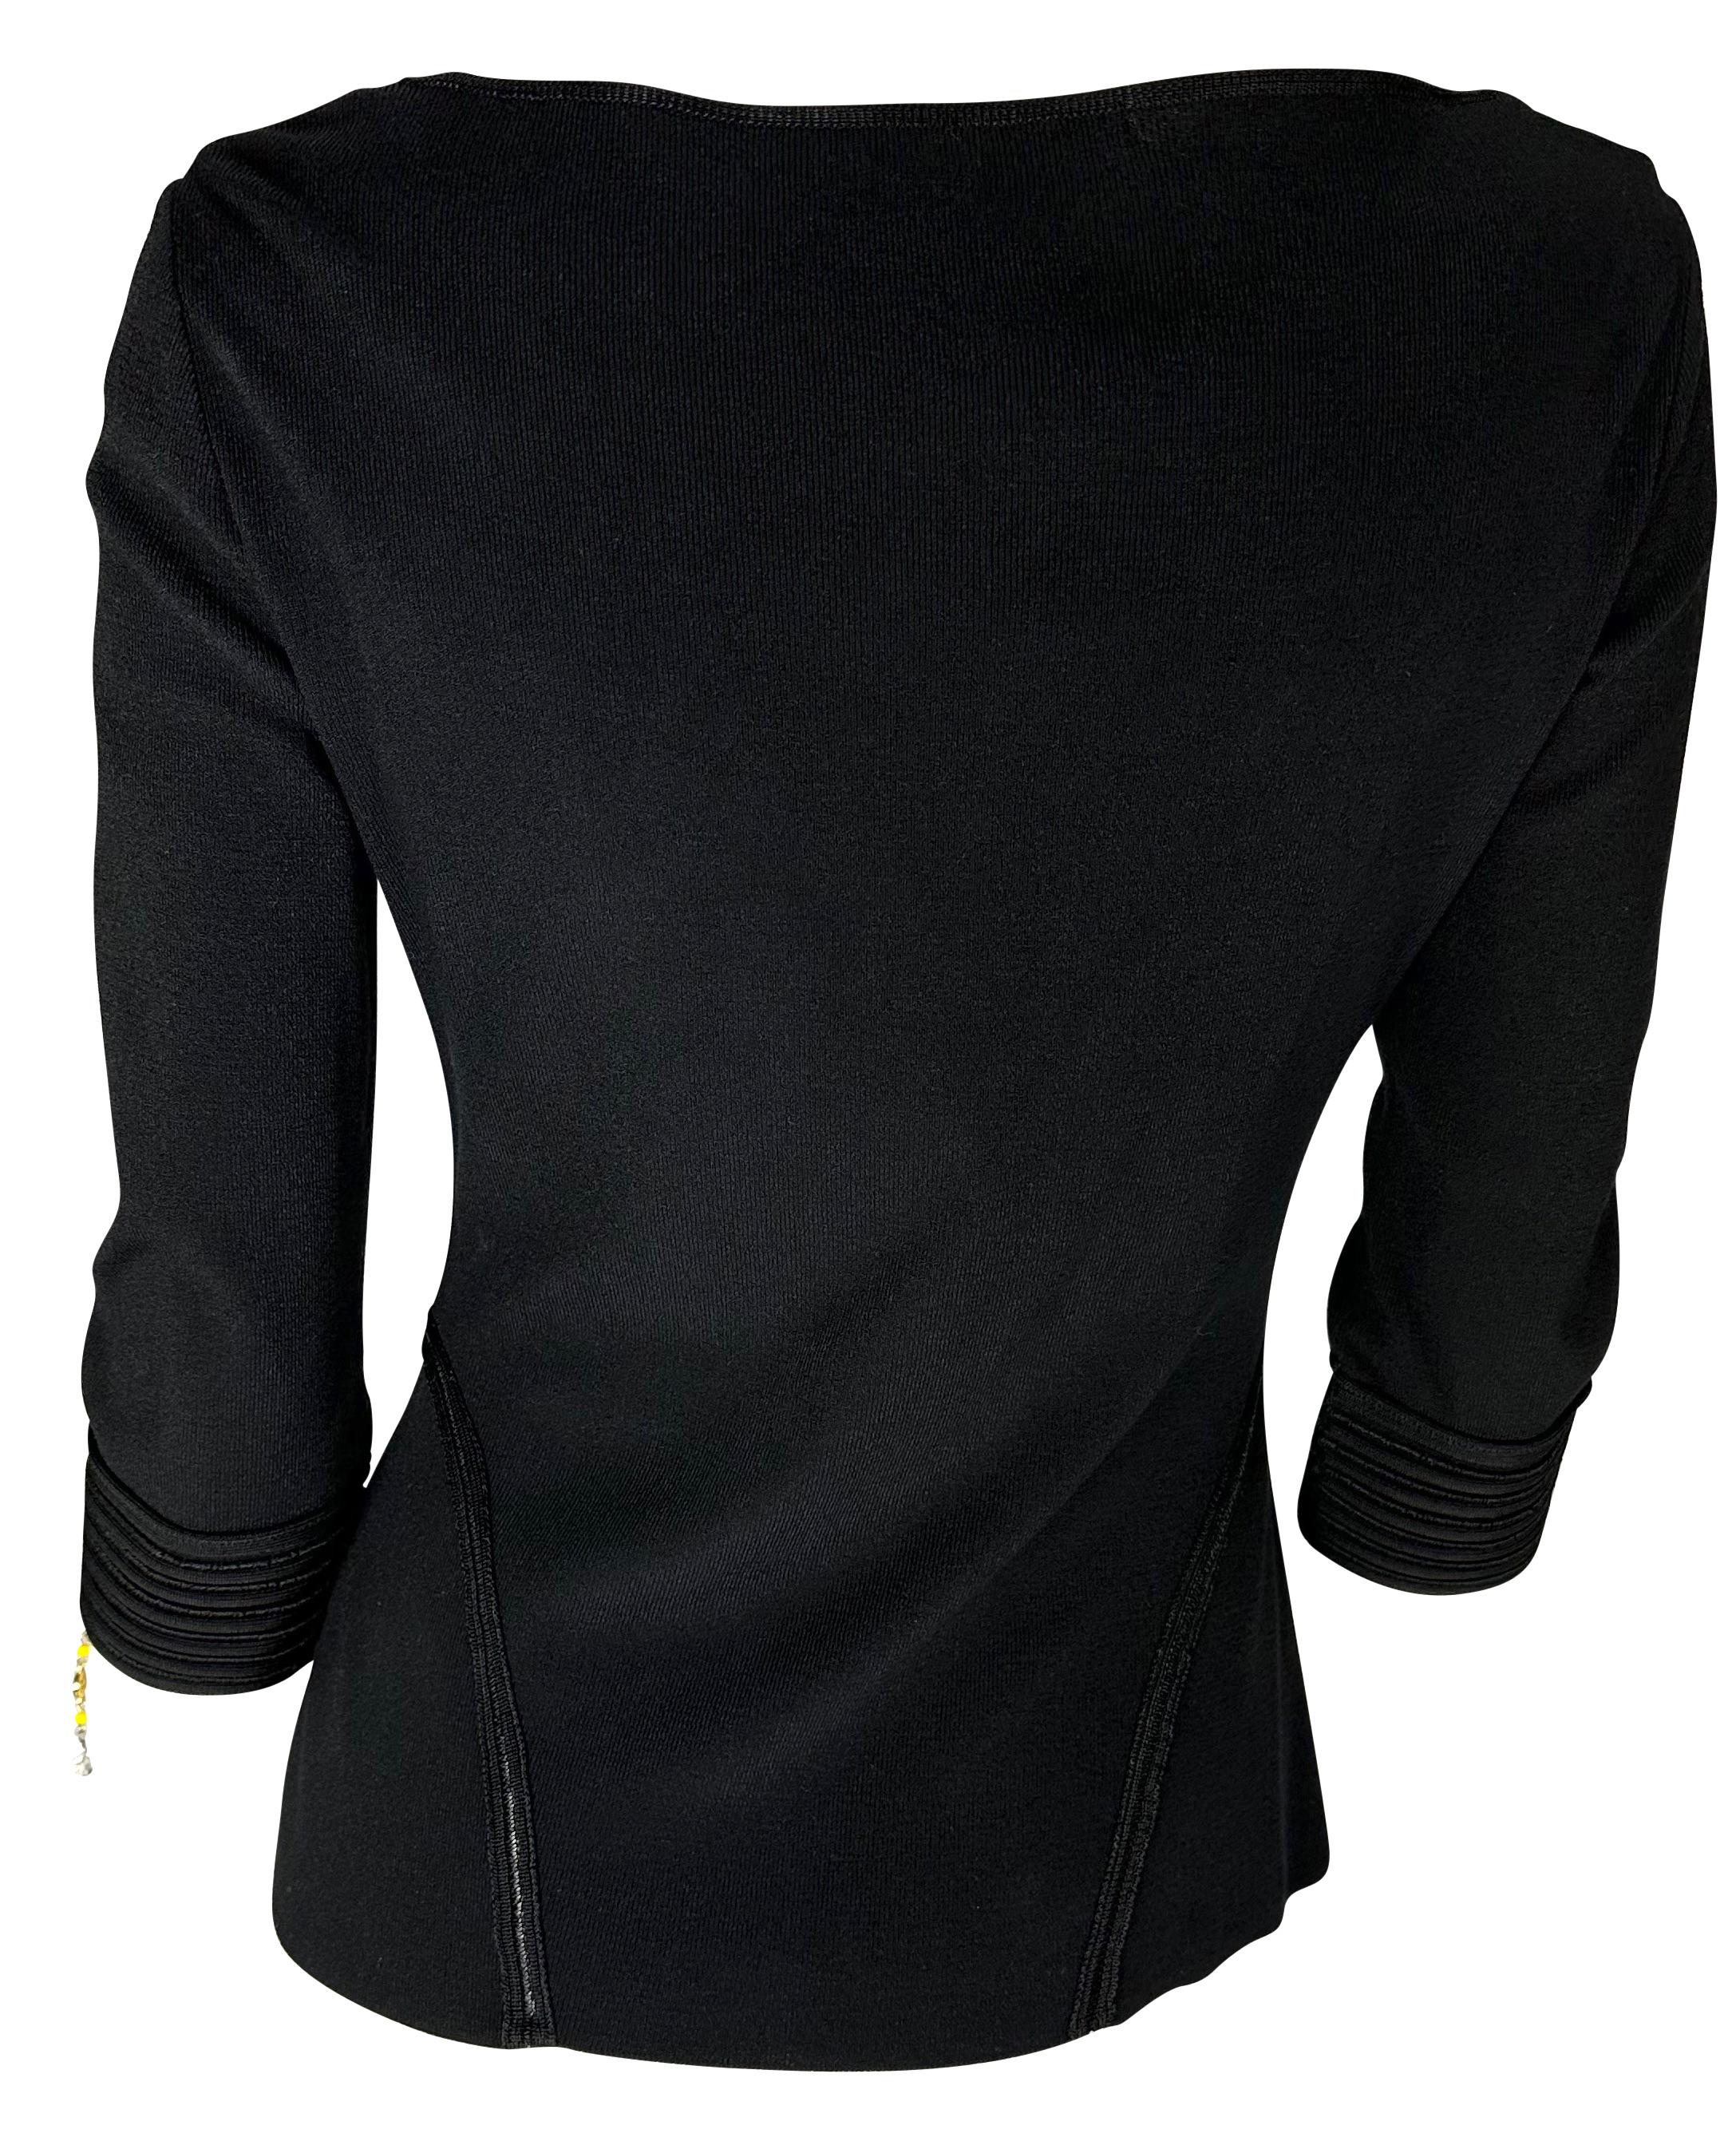 S/S 2003 Roberto Cavalli Charm Yellow Chinoiserie Beaded Black Sweater en vente 2